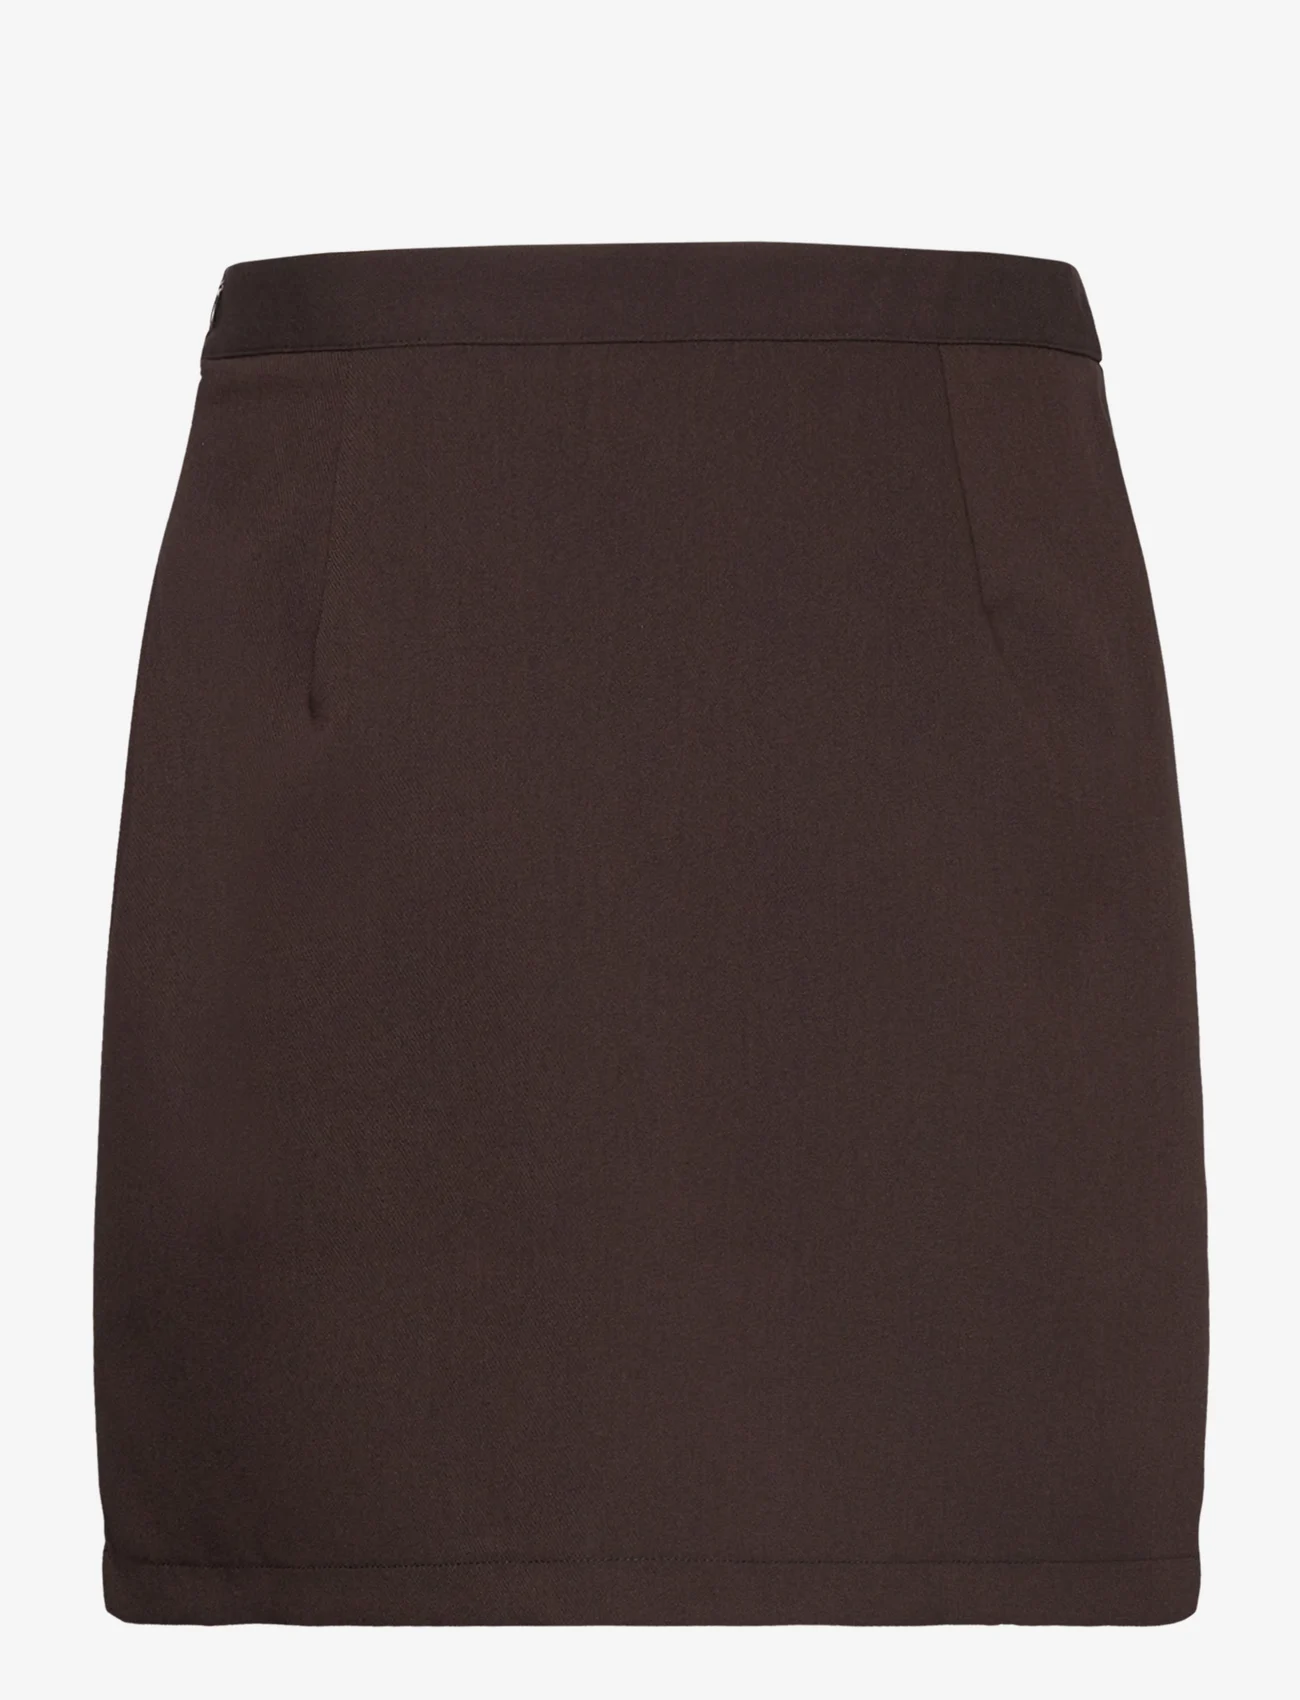 A-View - Annali skirt-1 - short skirts - brown - 1